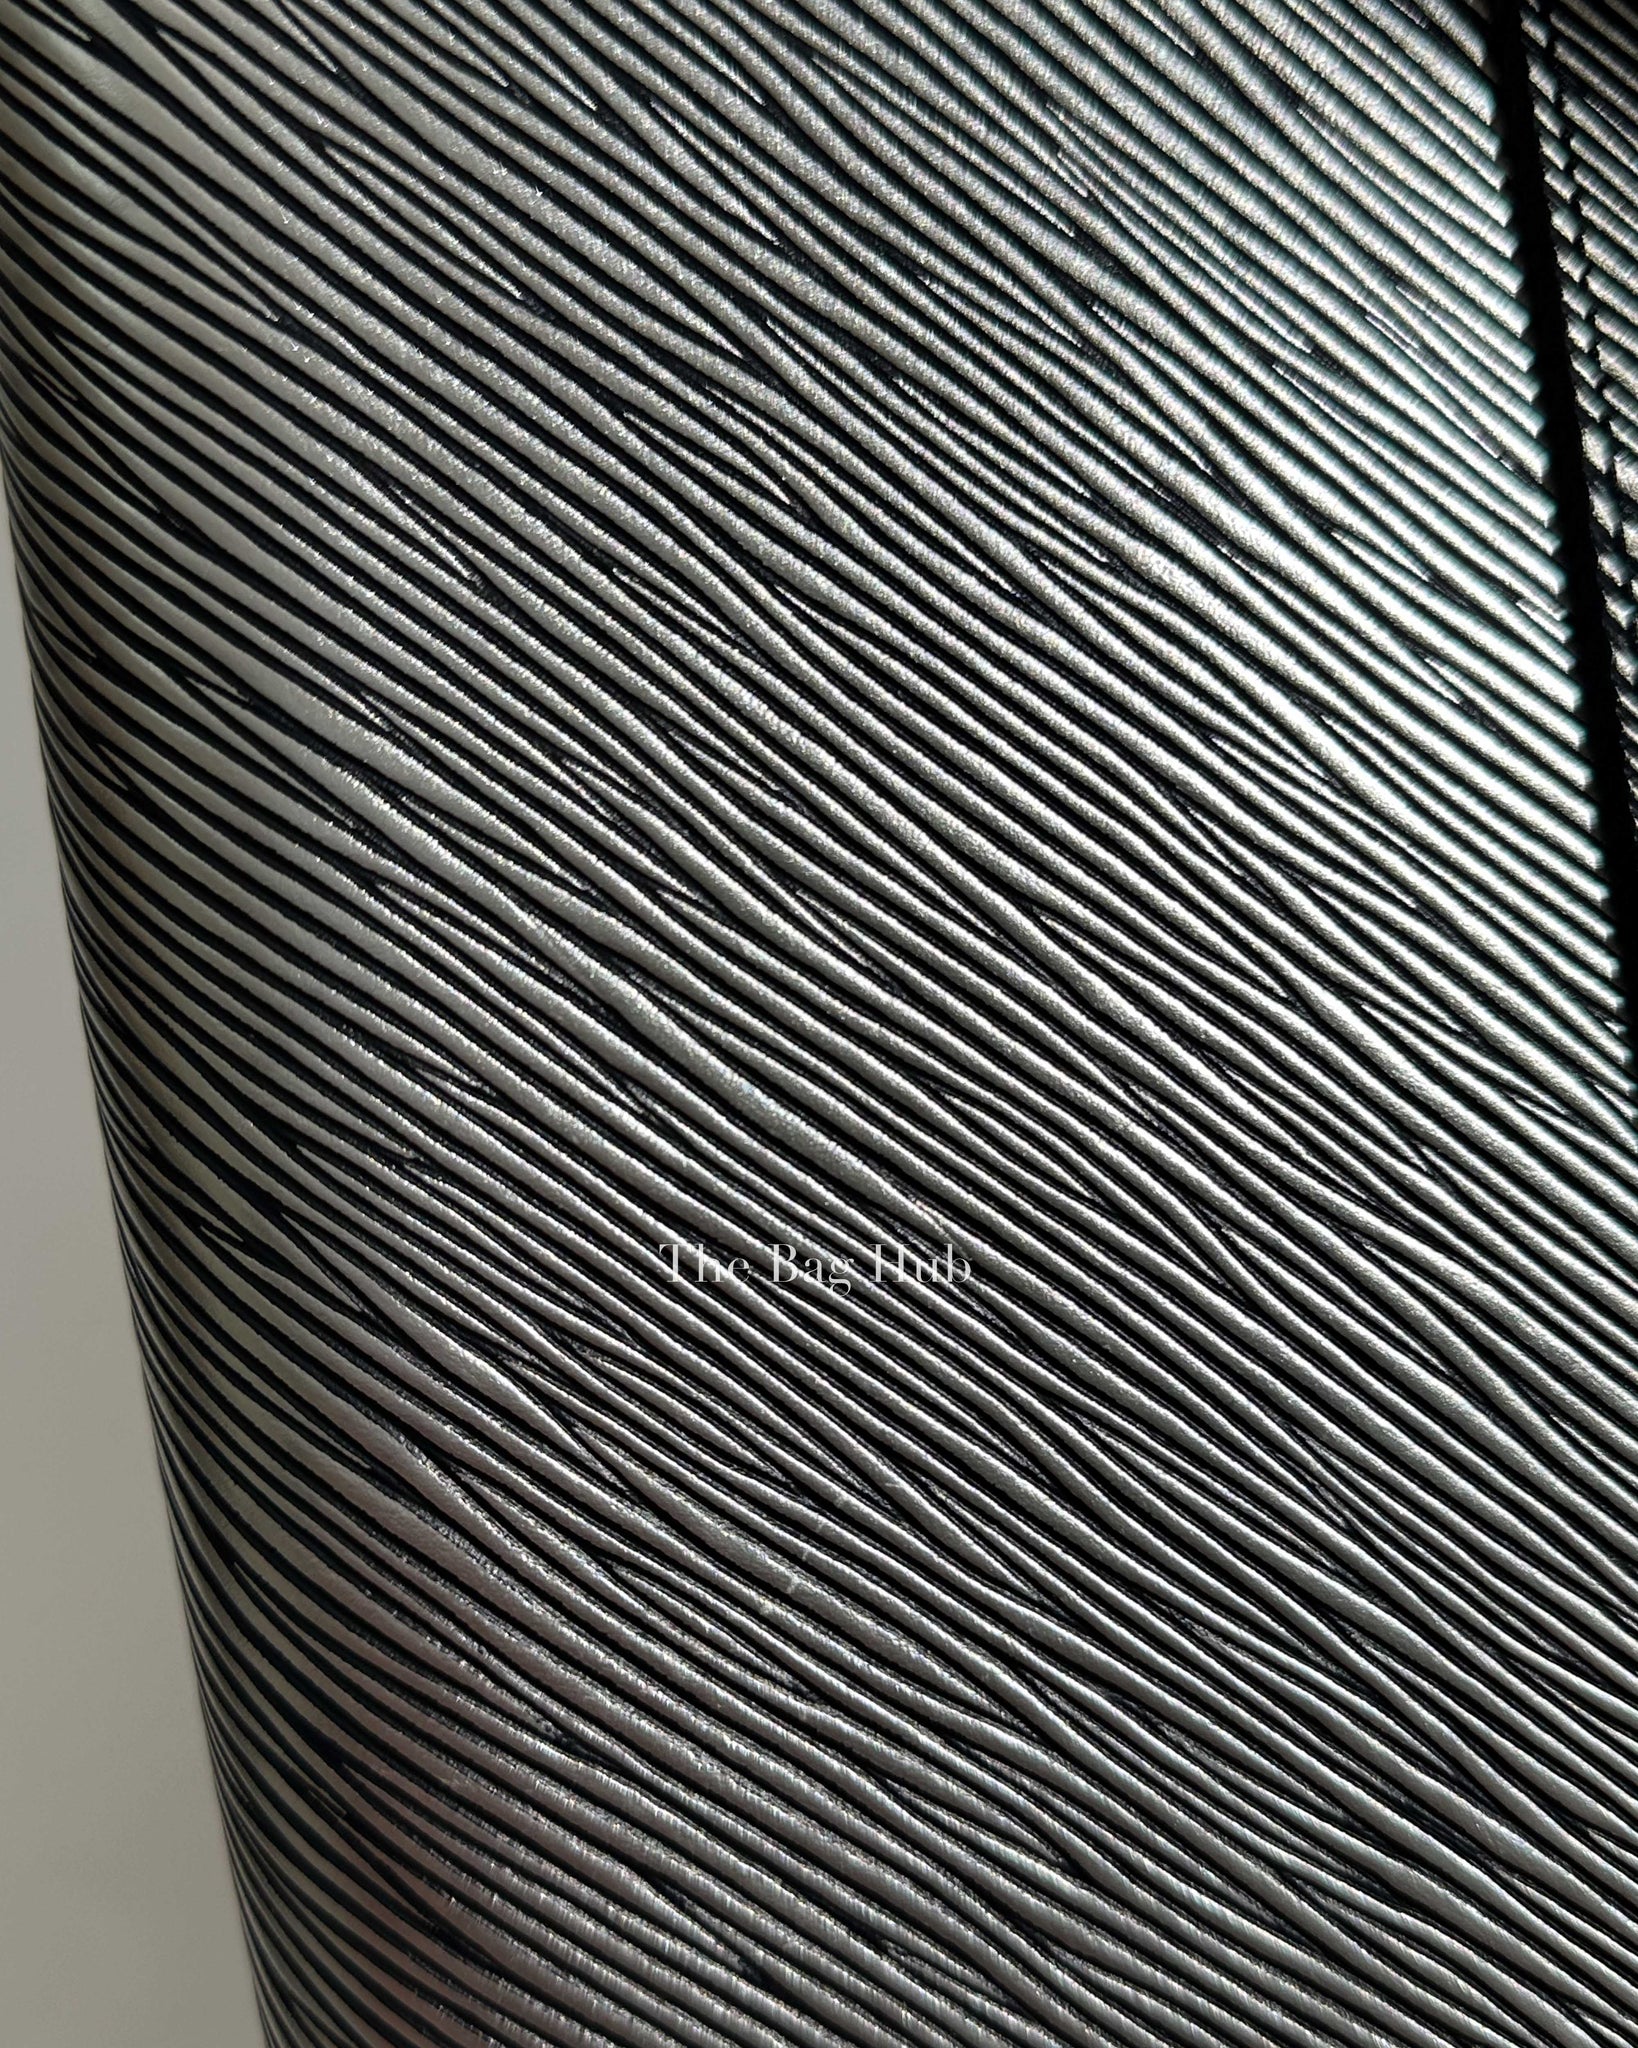 Louis Vuitton Black/Silver Epi Leather MM Twist Bag